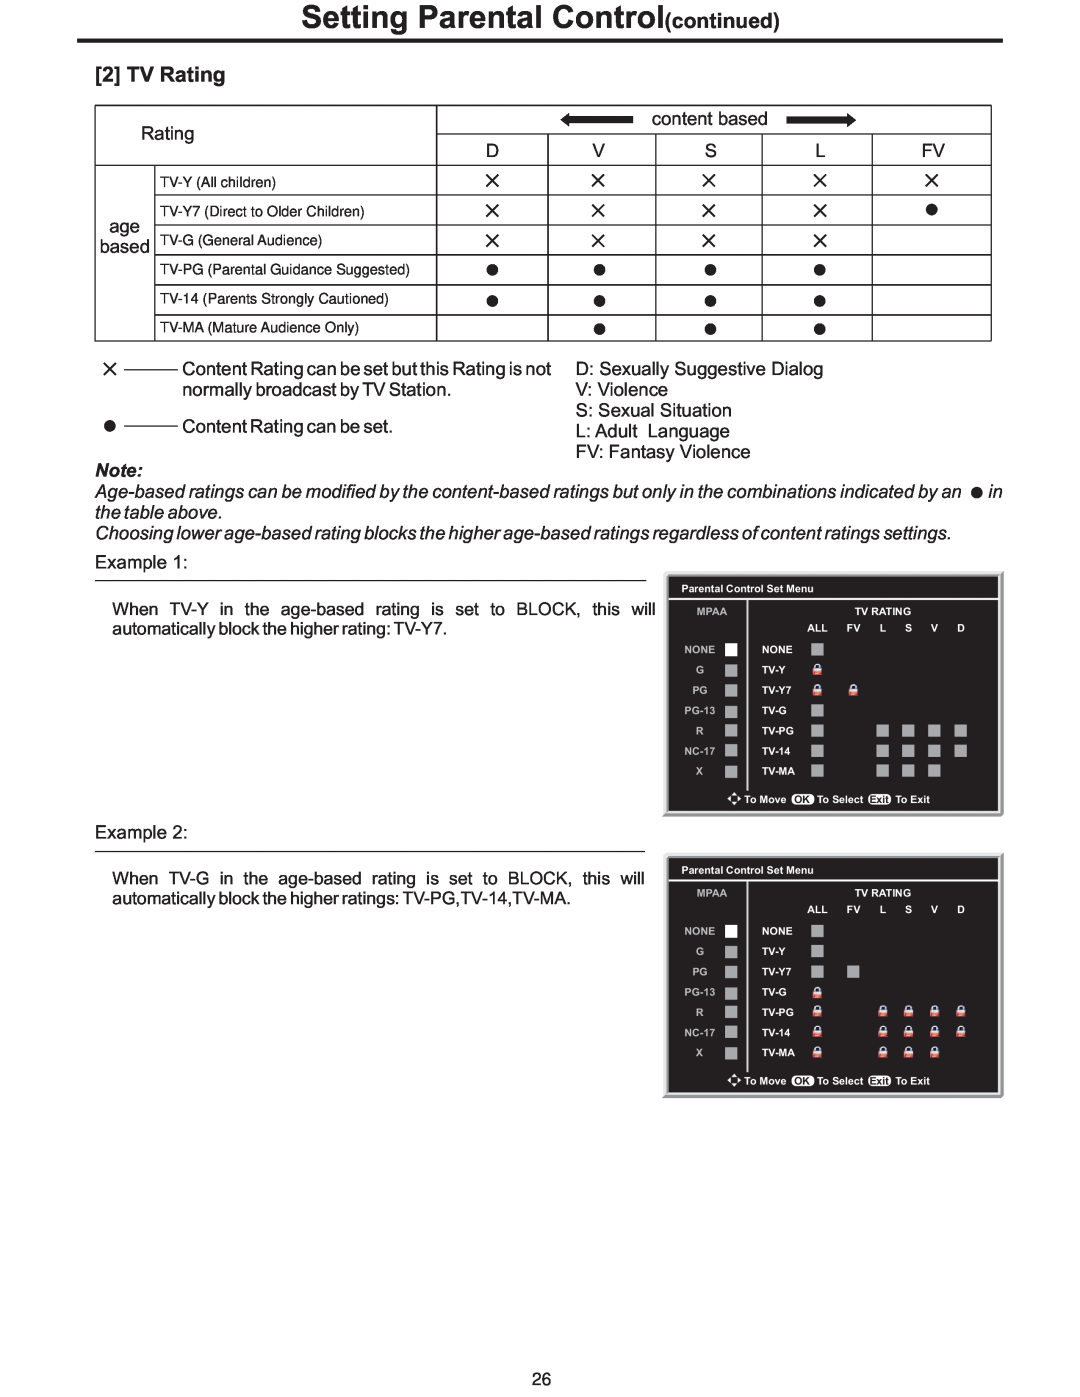 Polaroid PLA-4248 manual Setting Parental Controlcontinued, TV Rating 